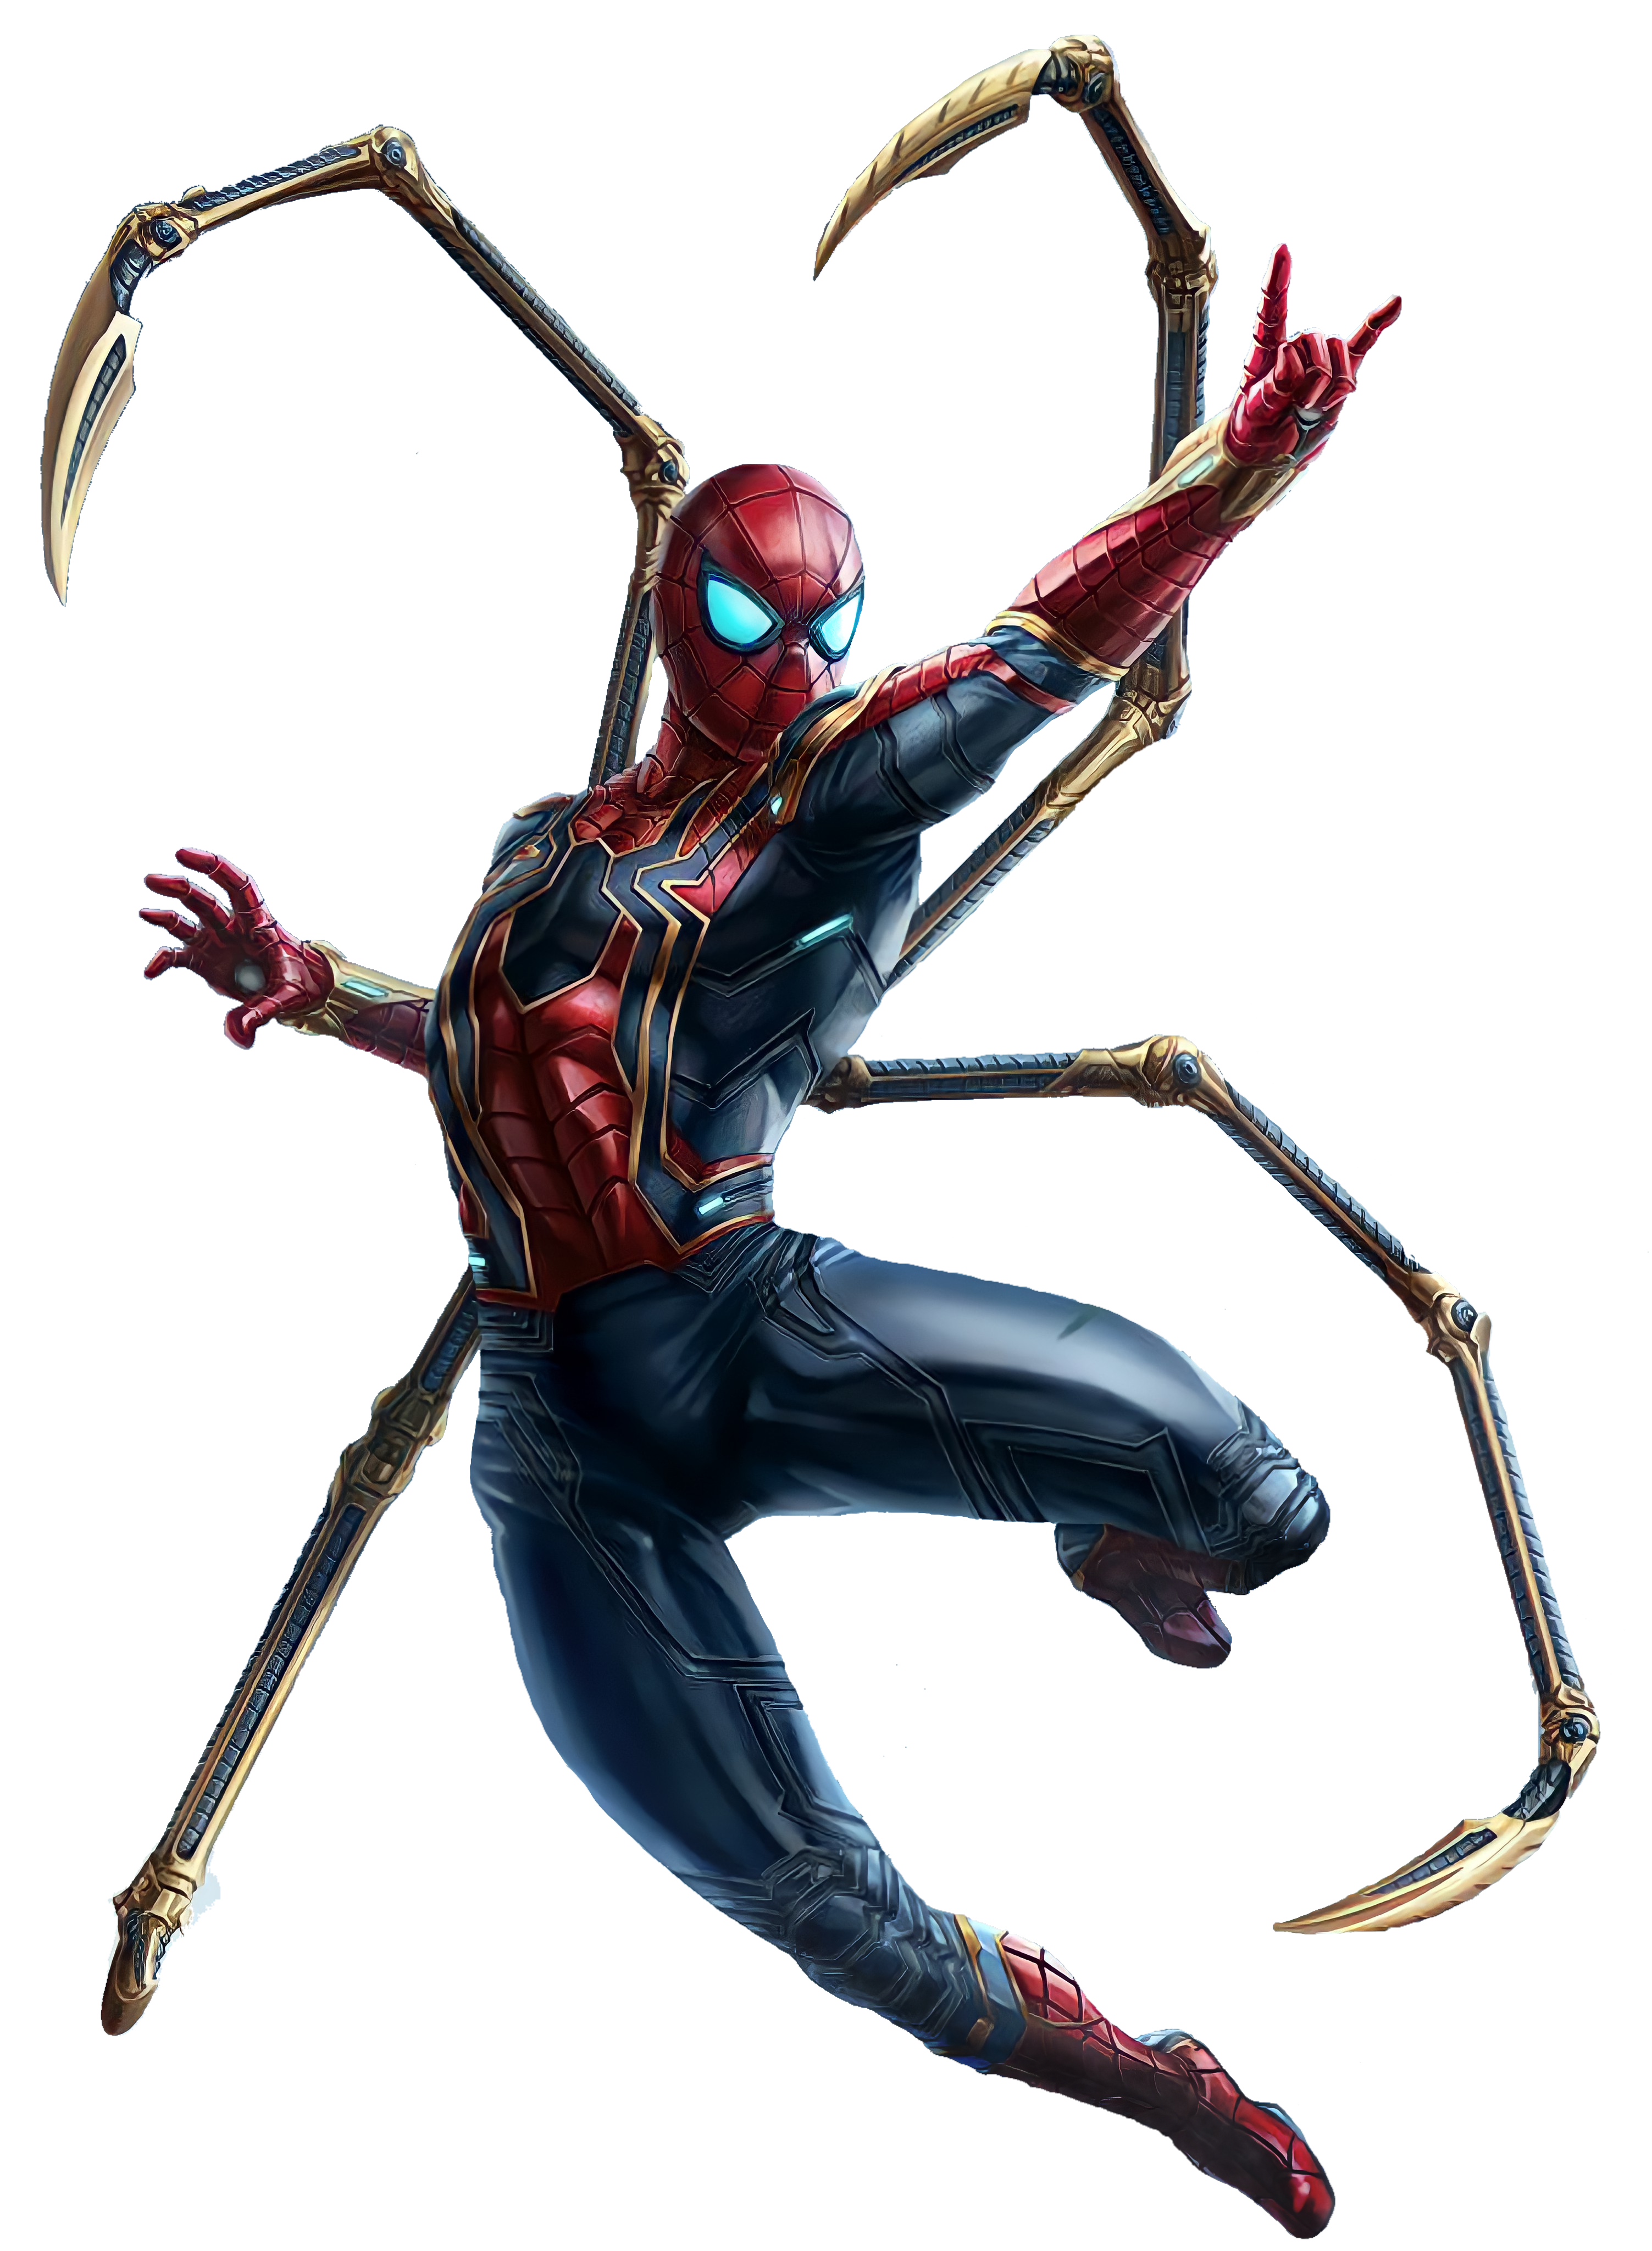 Spider-Man: No Way Home - Wikipedia